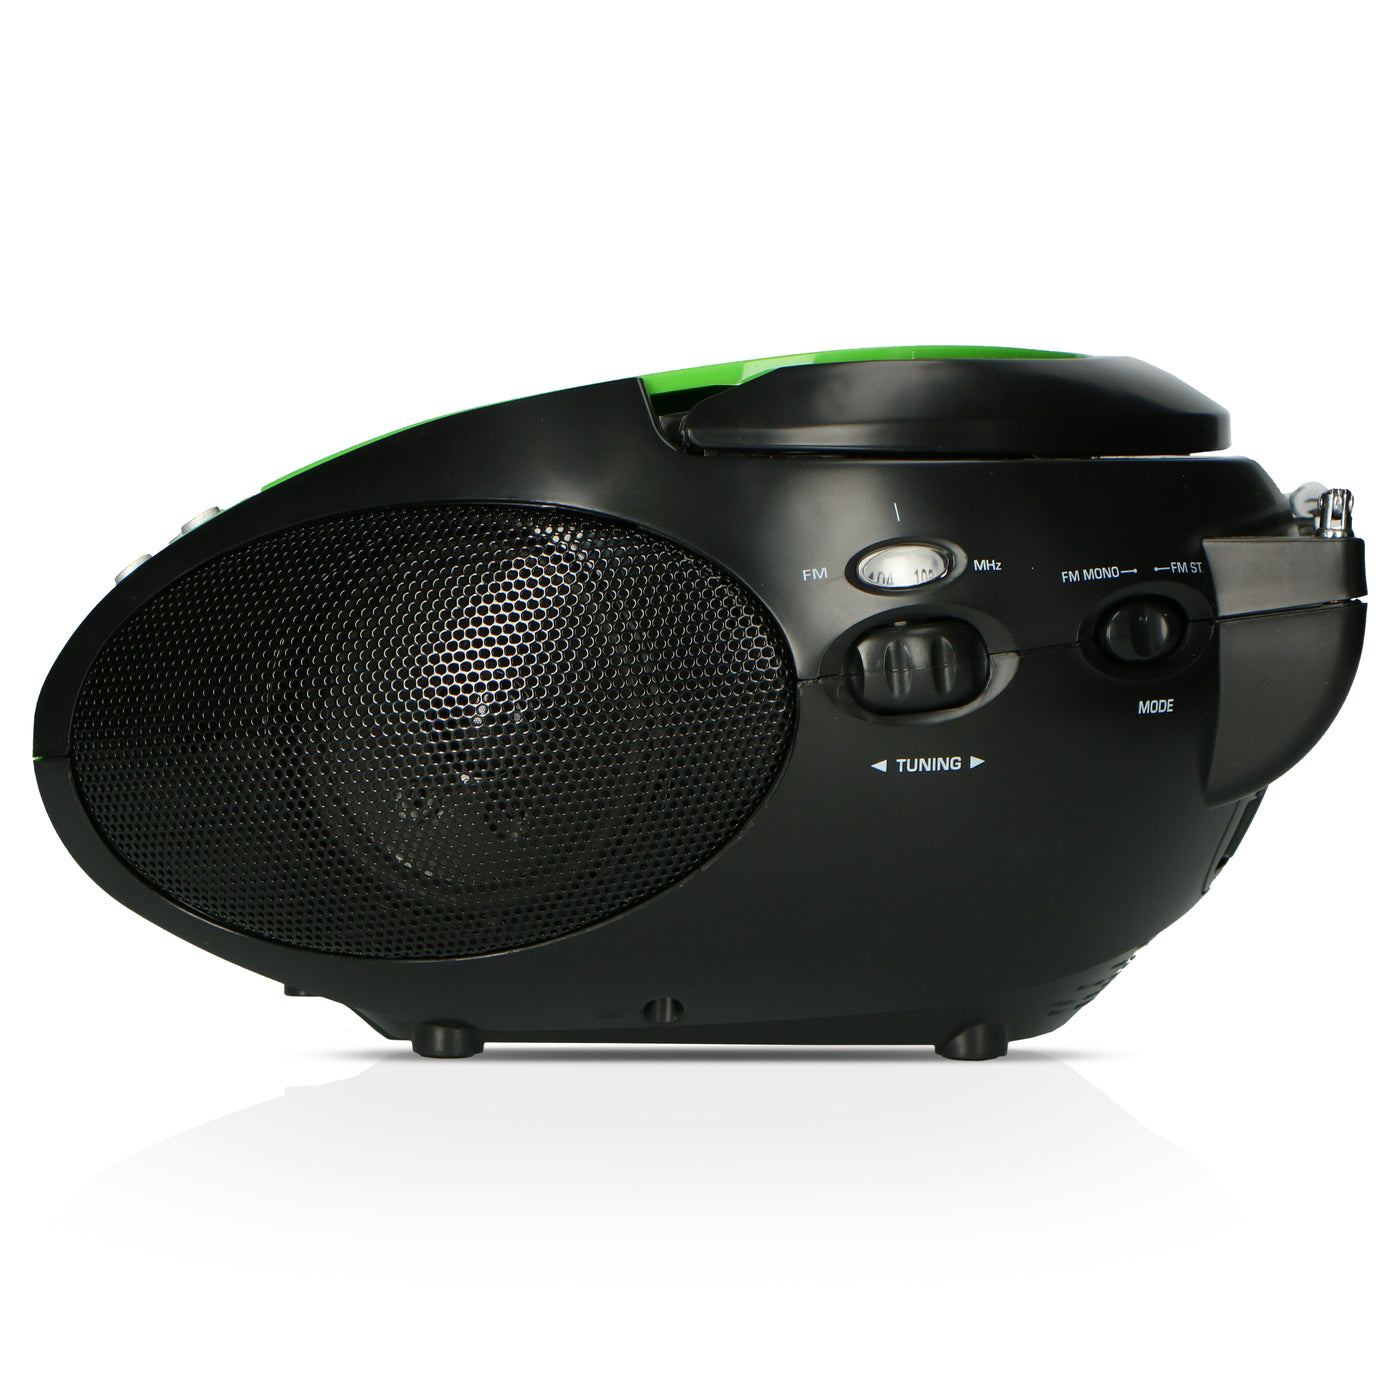 Lenco SCD-24 Green/Black - Radio portable avec lecteur CD - Vert/noir